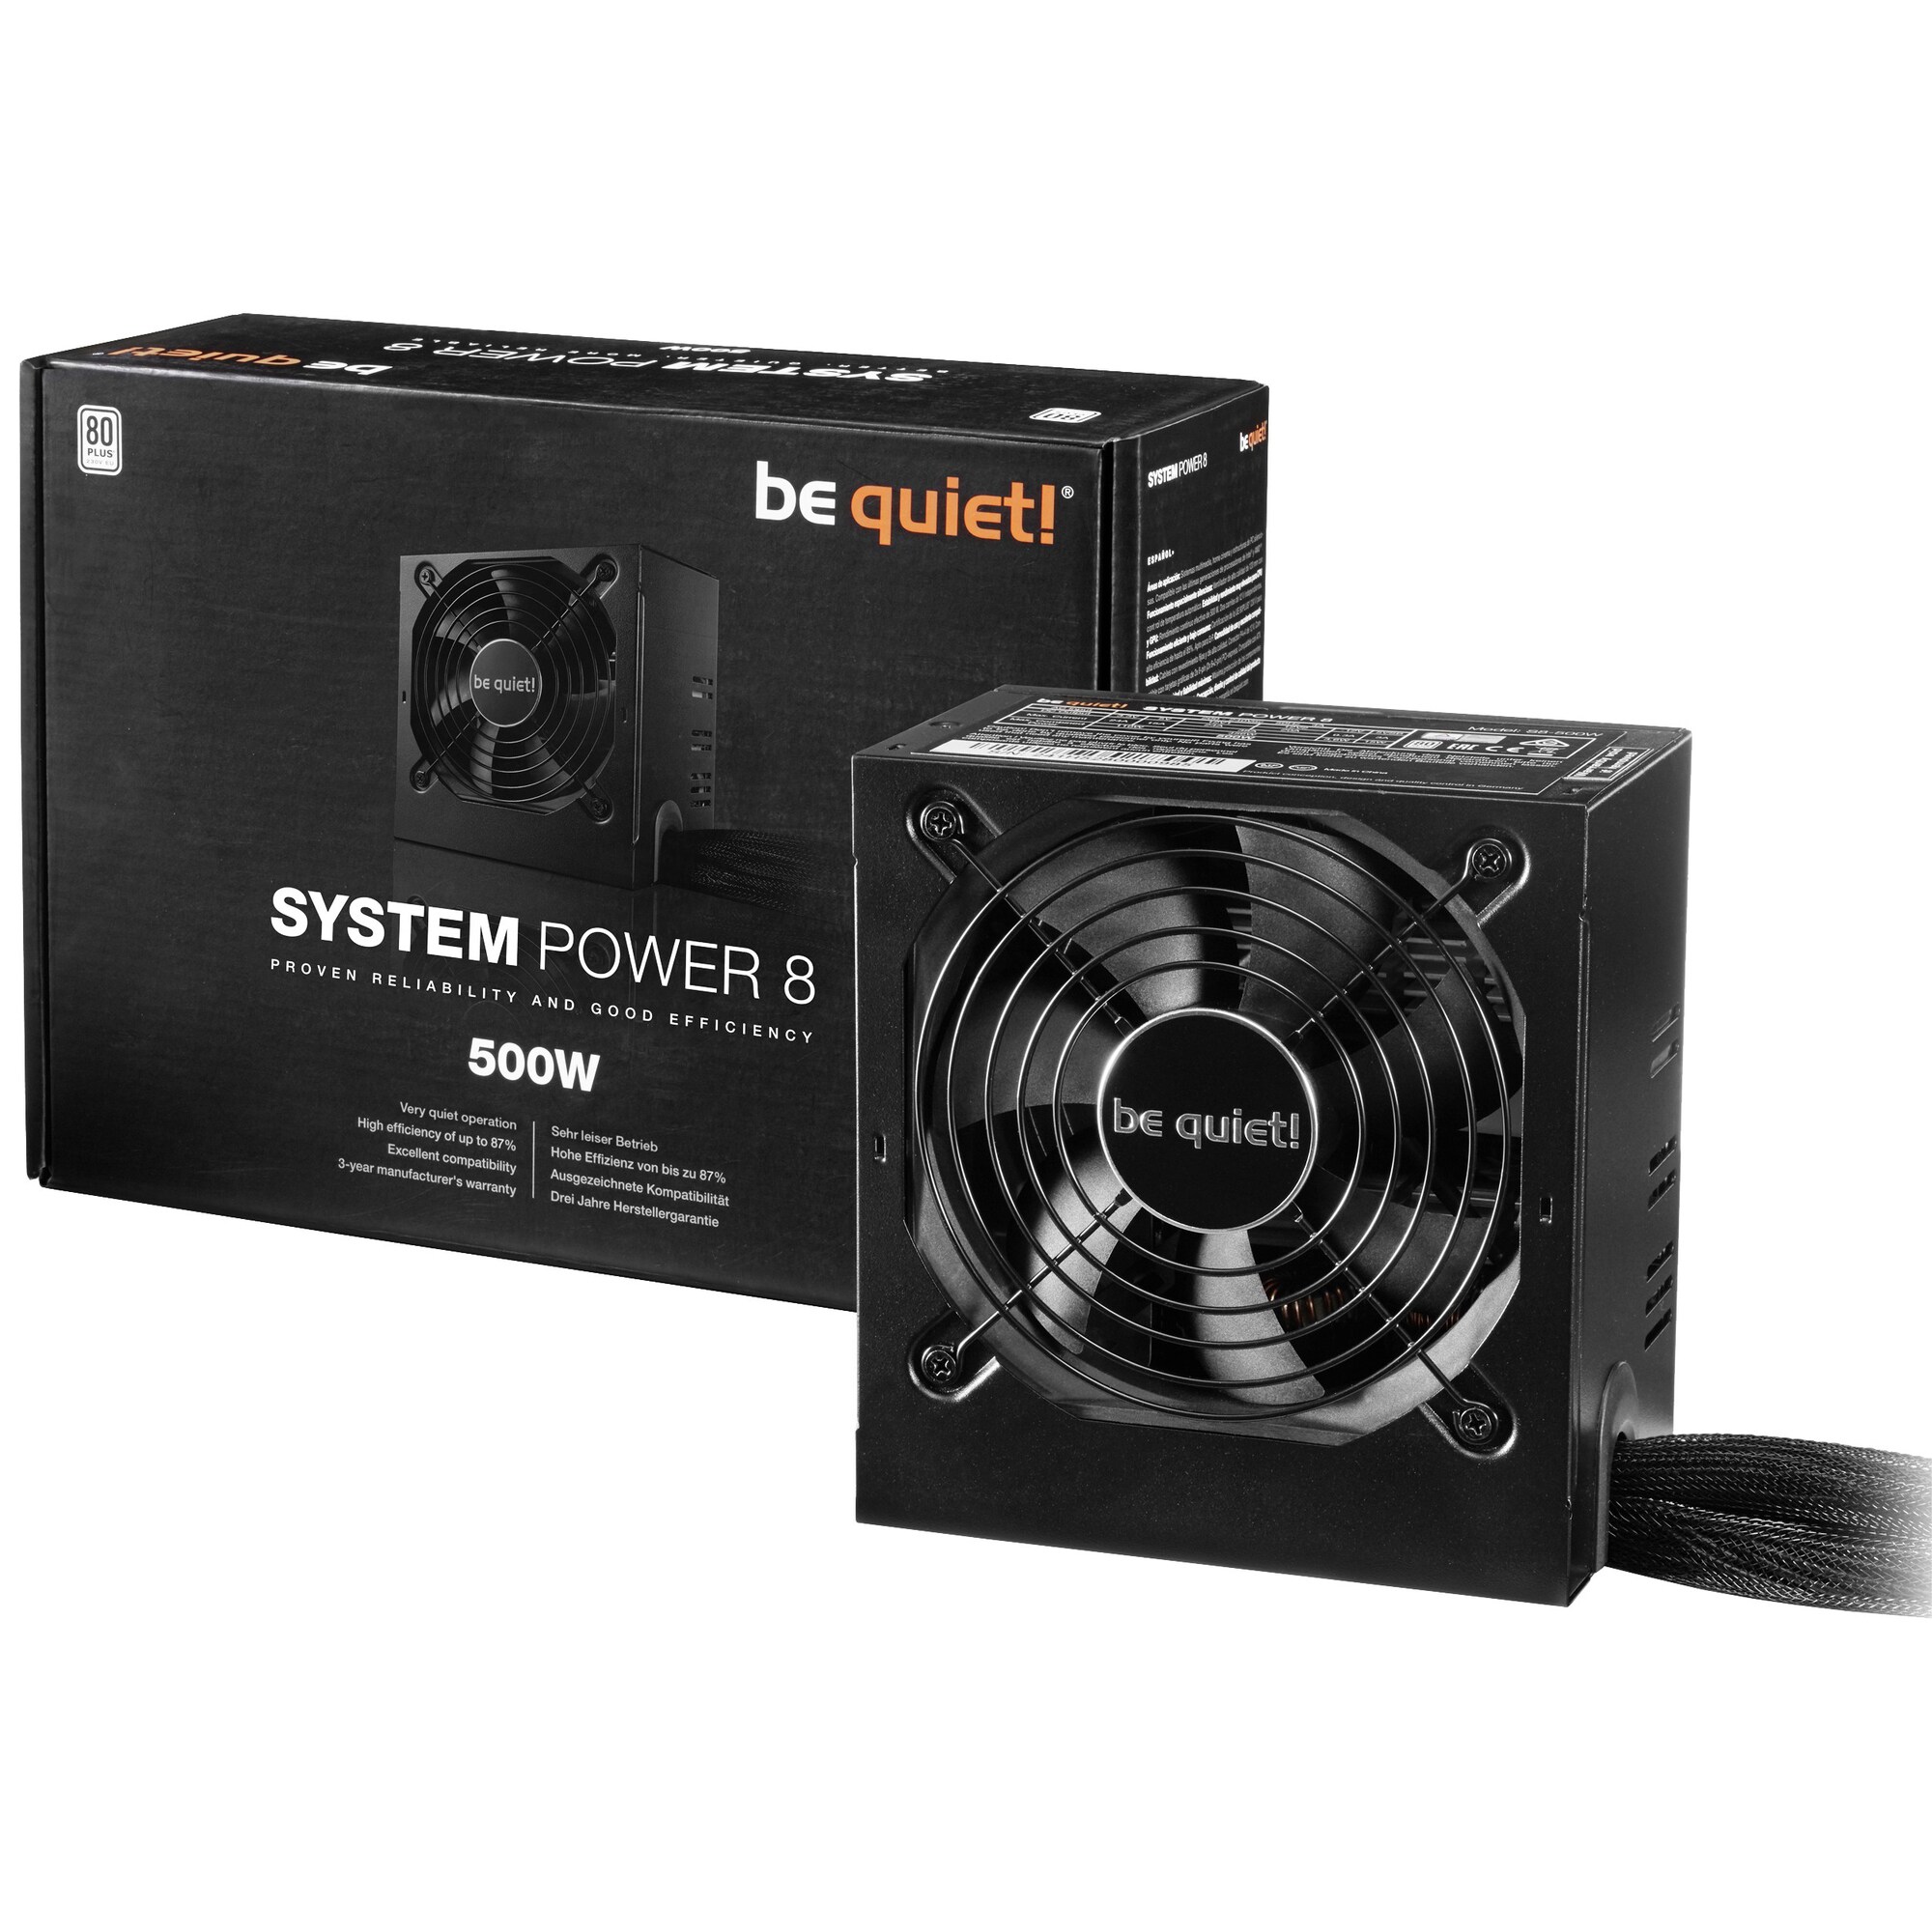 be quiet! System Power 8 500W virtalähde - Gigantti verkkokauppa